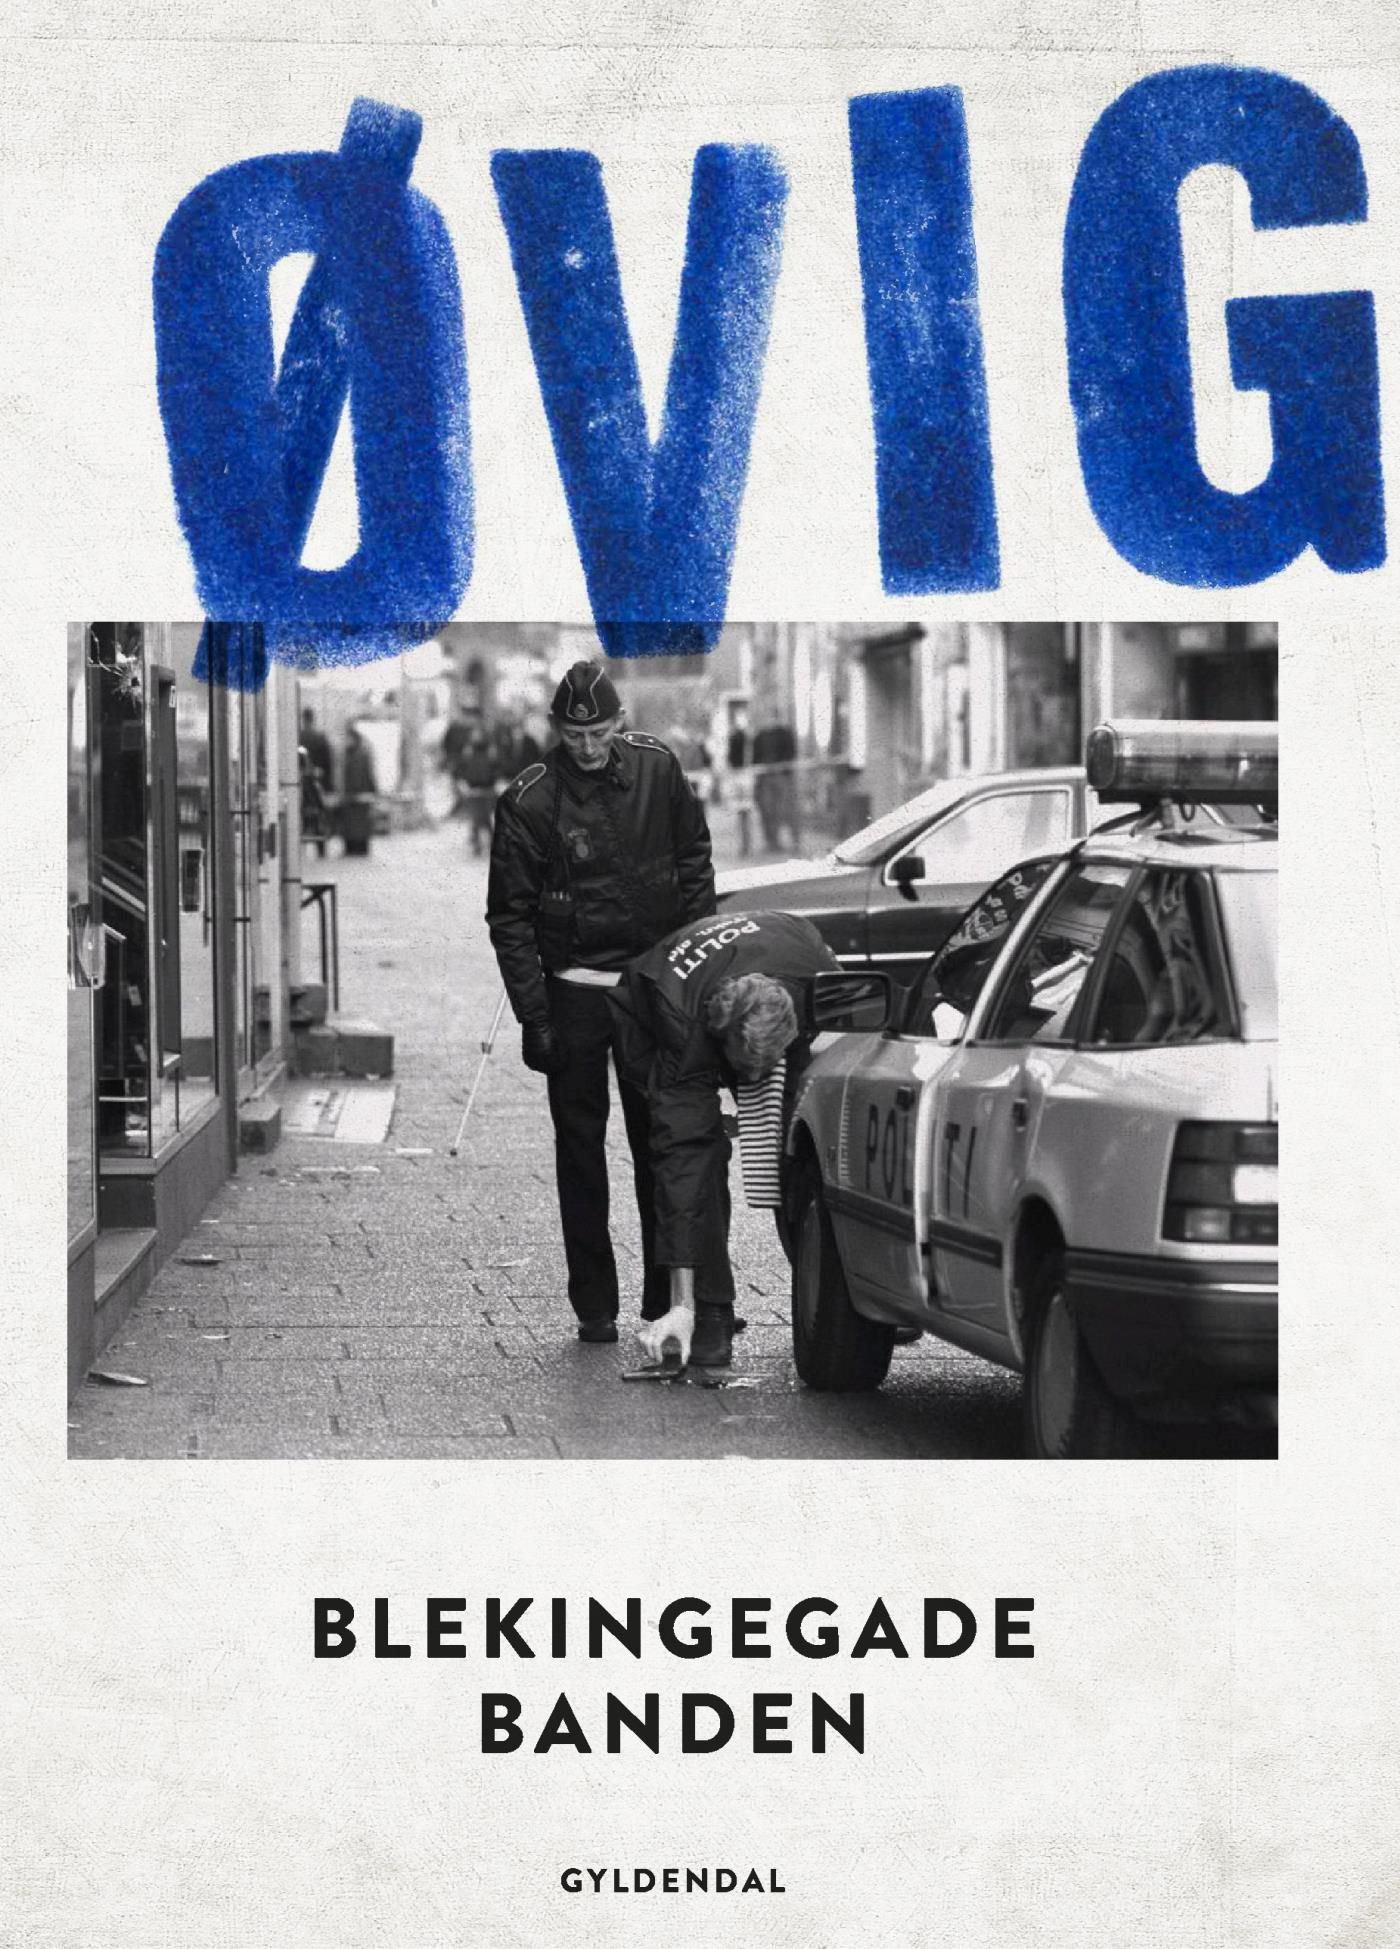 Blekingegadebanden 1 og 2, e-bog af Peter Øvig Knudsen